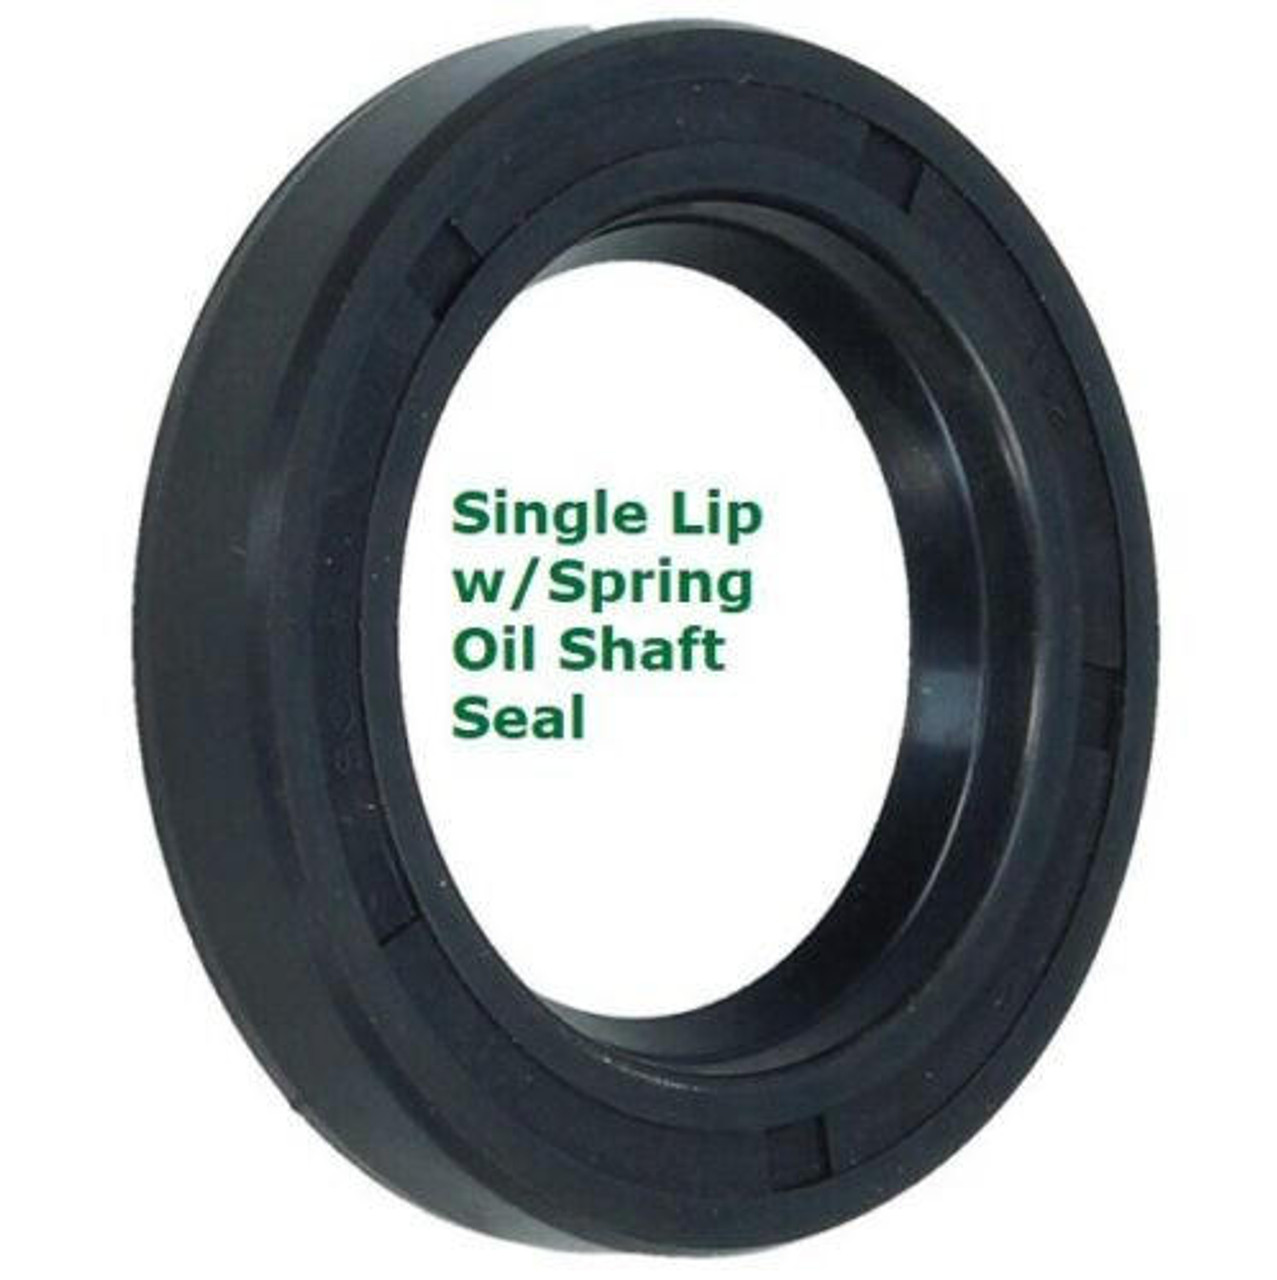 Metric Oil Shaft Seal 64 x 80 x 8mm Single Lip Ref# CR563537 Price for 1 pc